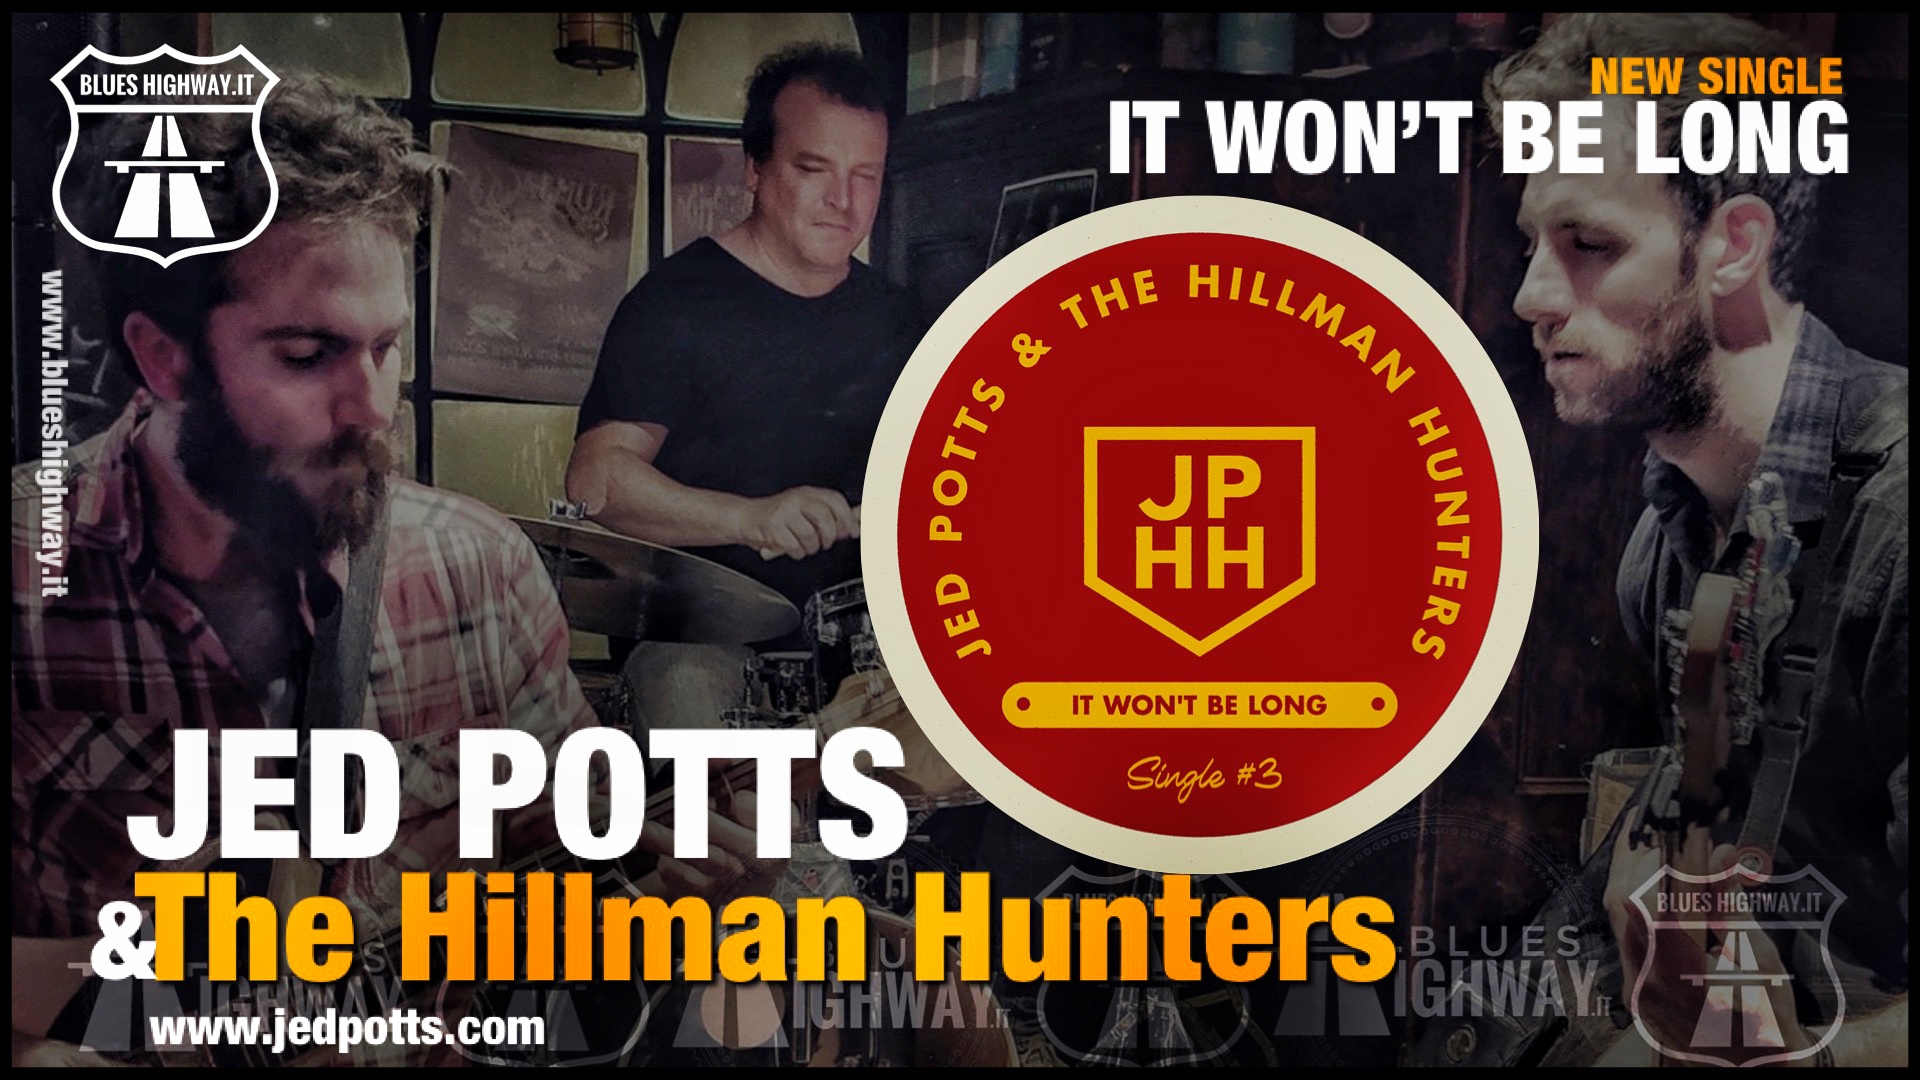 JED POTTS & THE HILLMAN HUNTERS - "IT WON'T BE LONG"